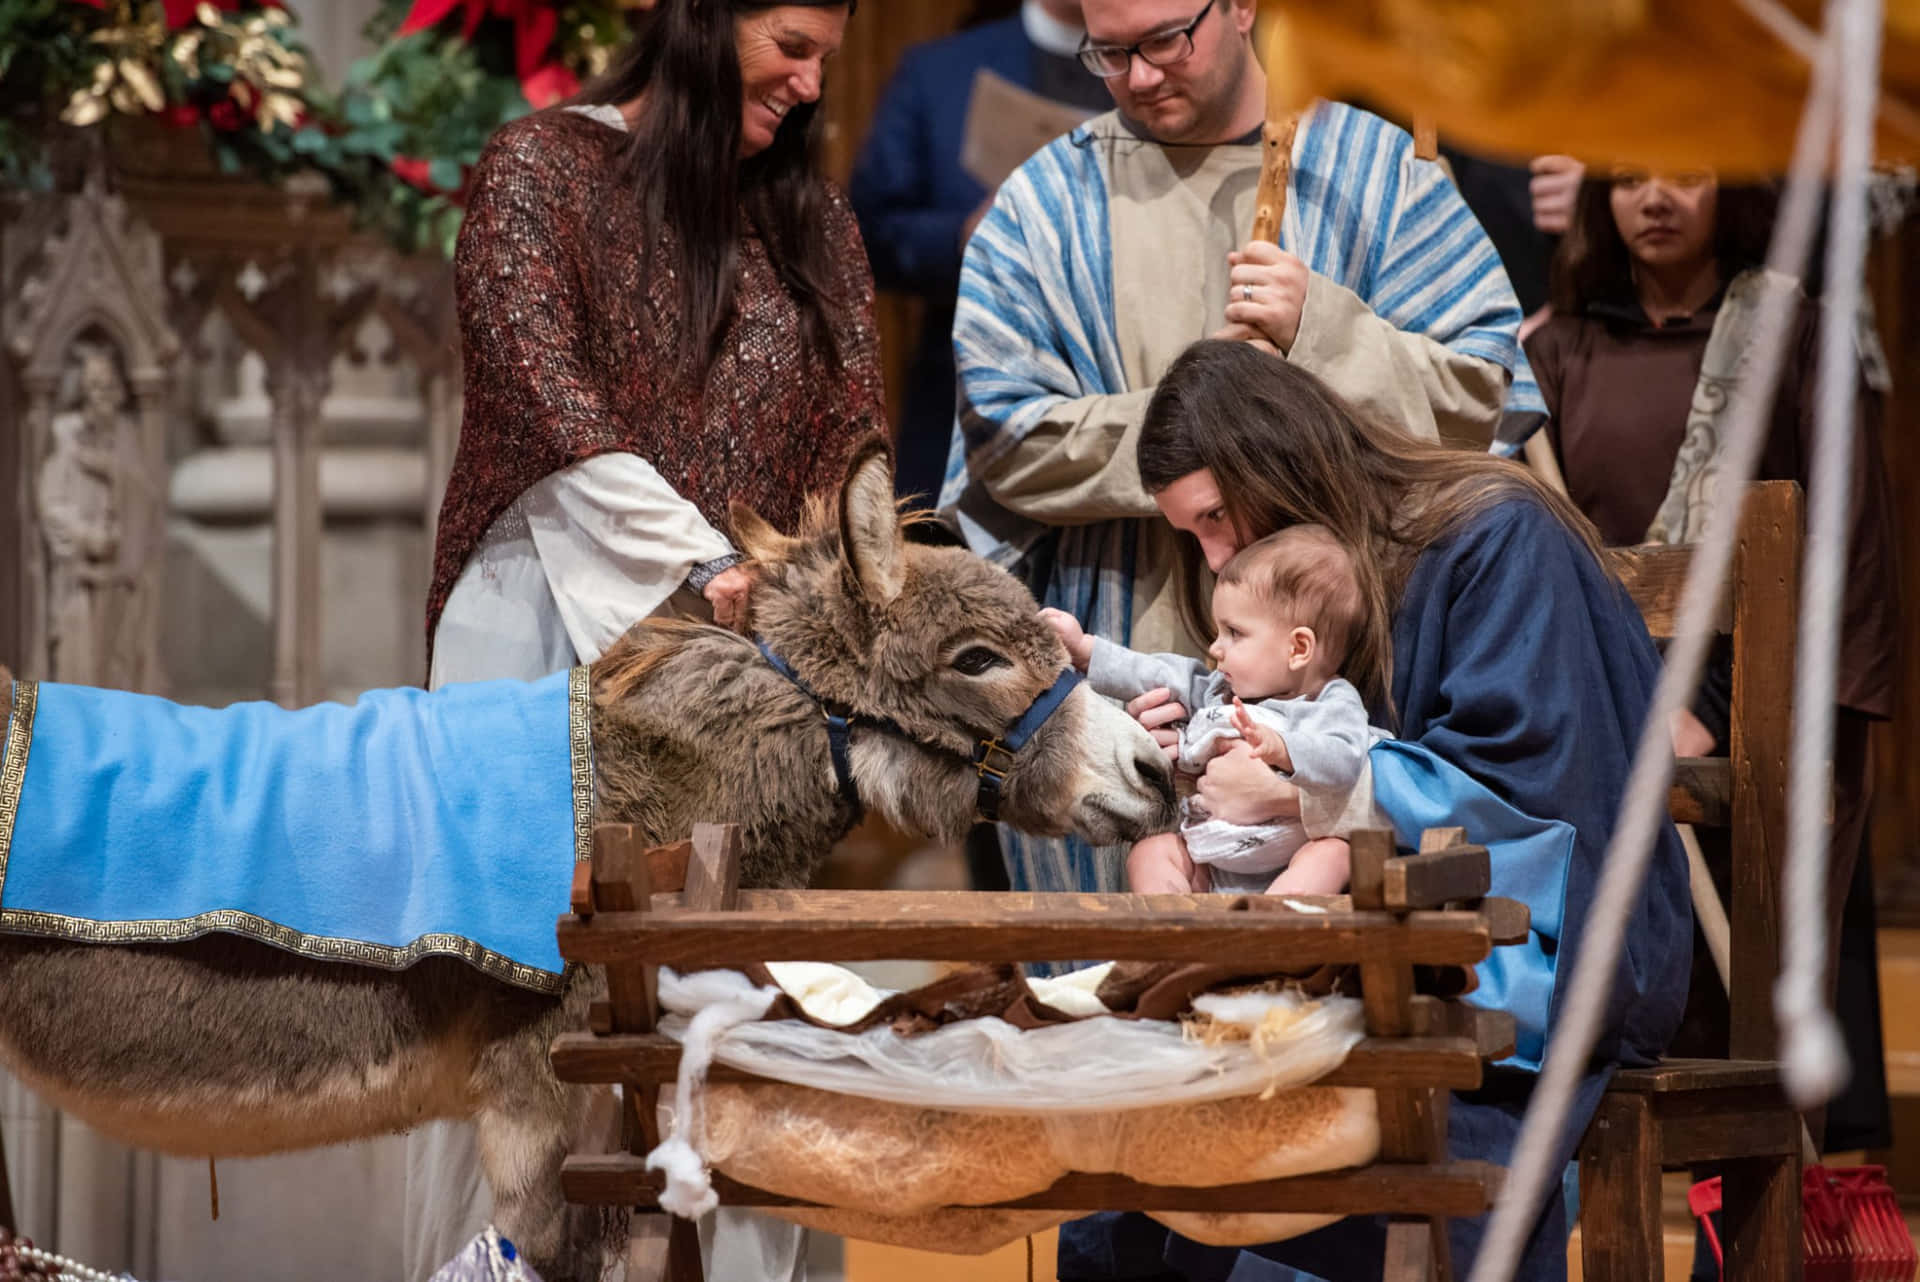 A classic nativity scene during the Christmas season